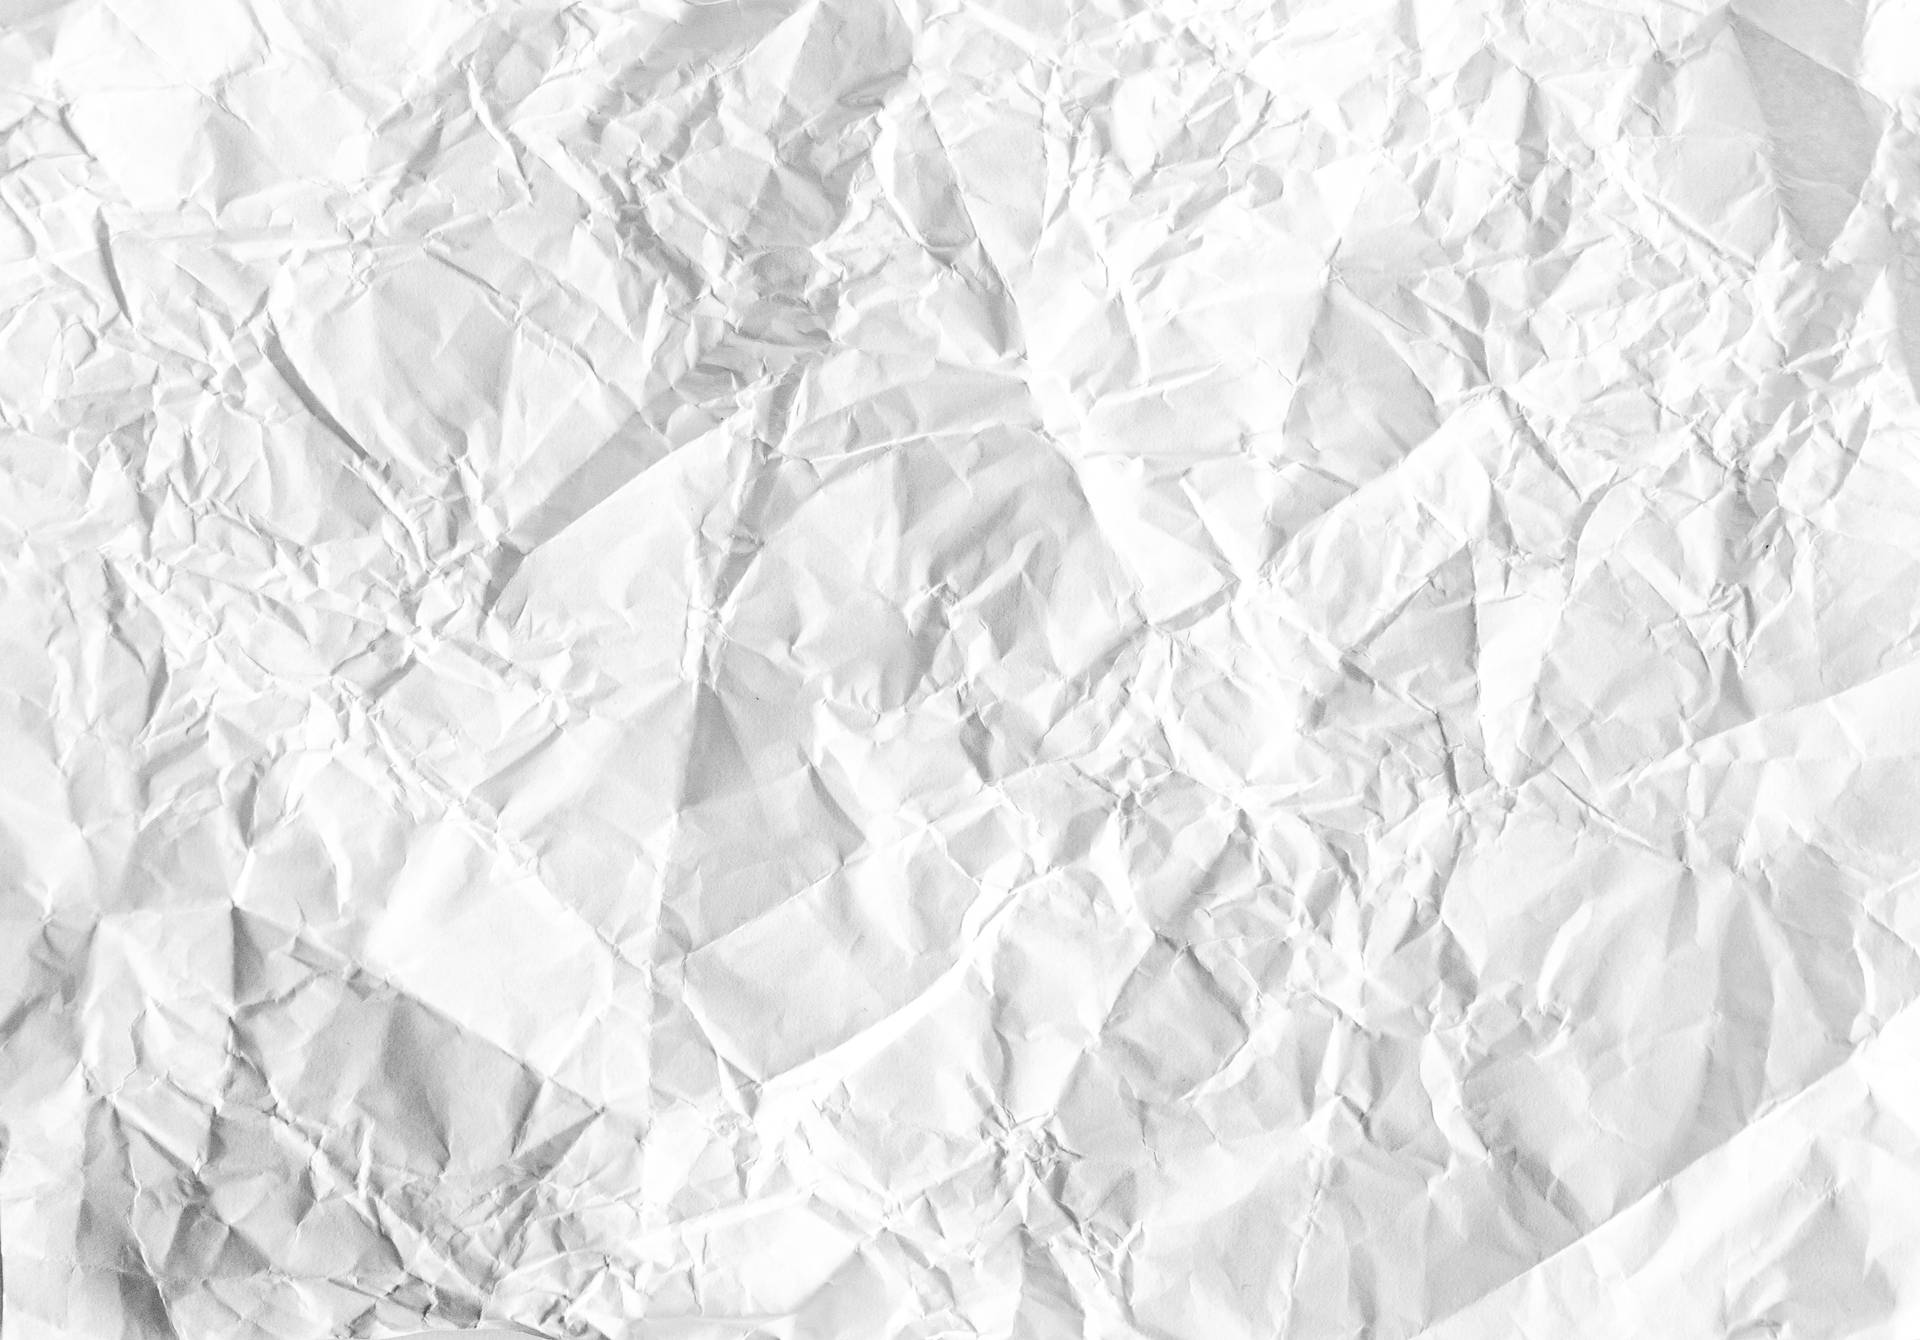 Exquisite Crumpled White Paper Texture Background